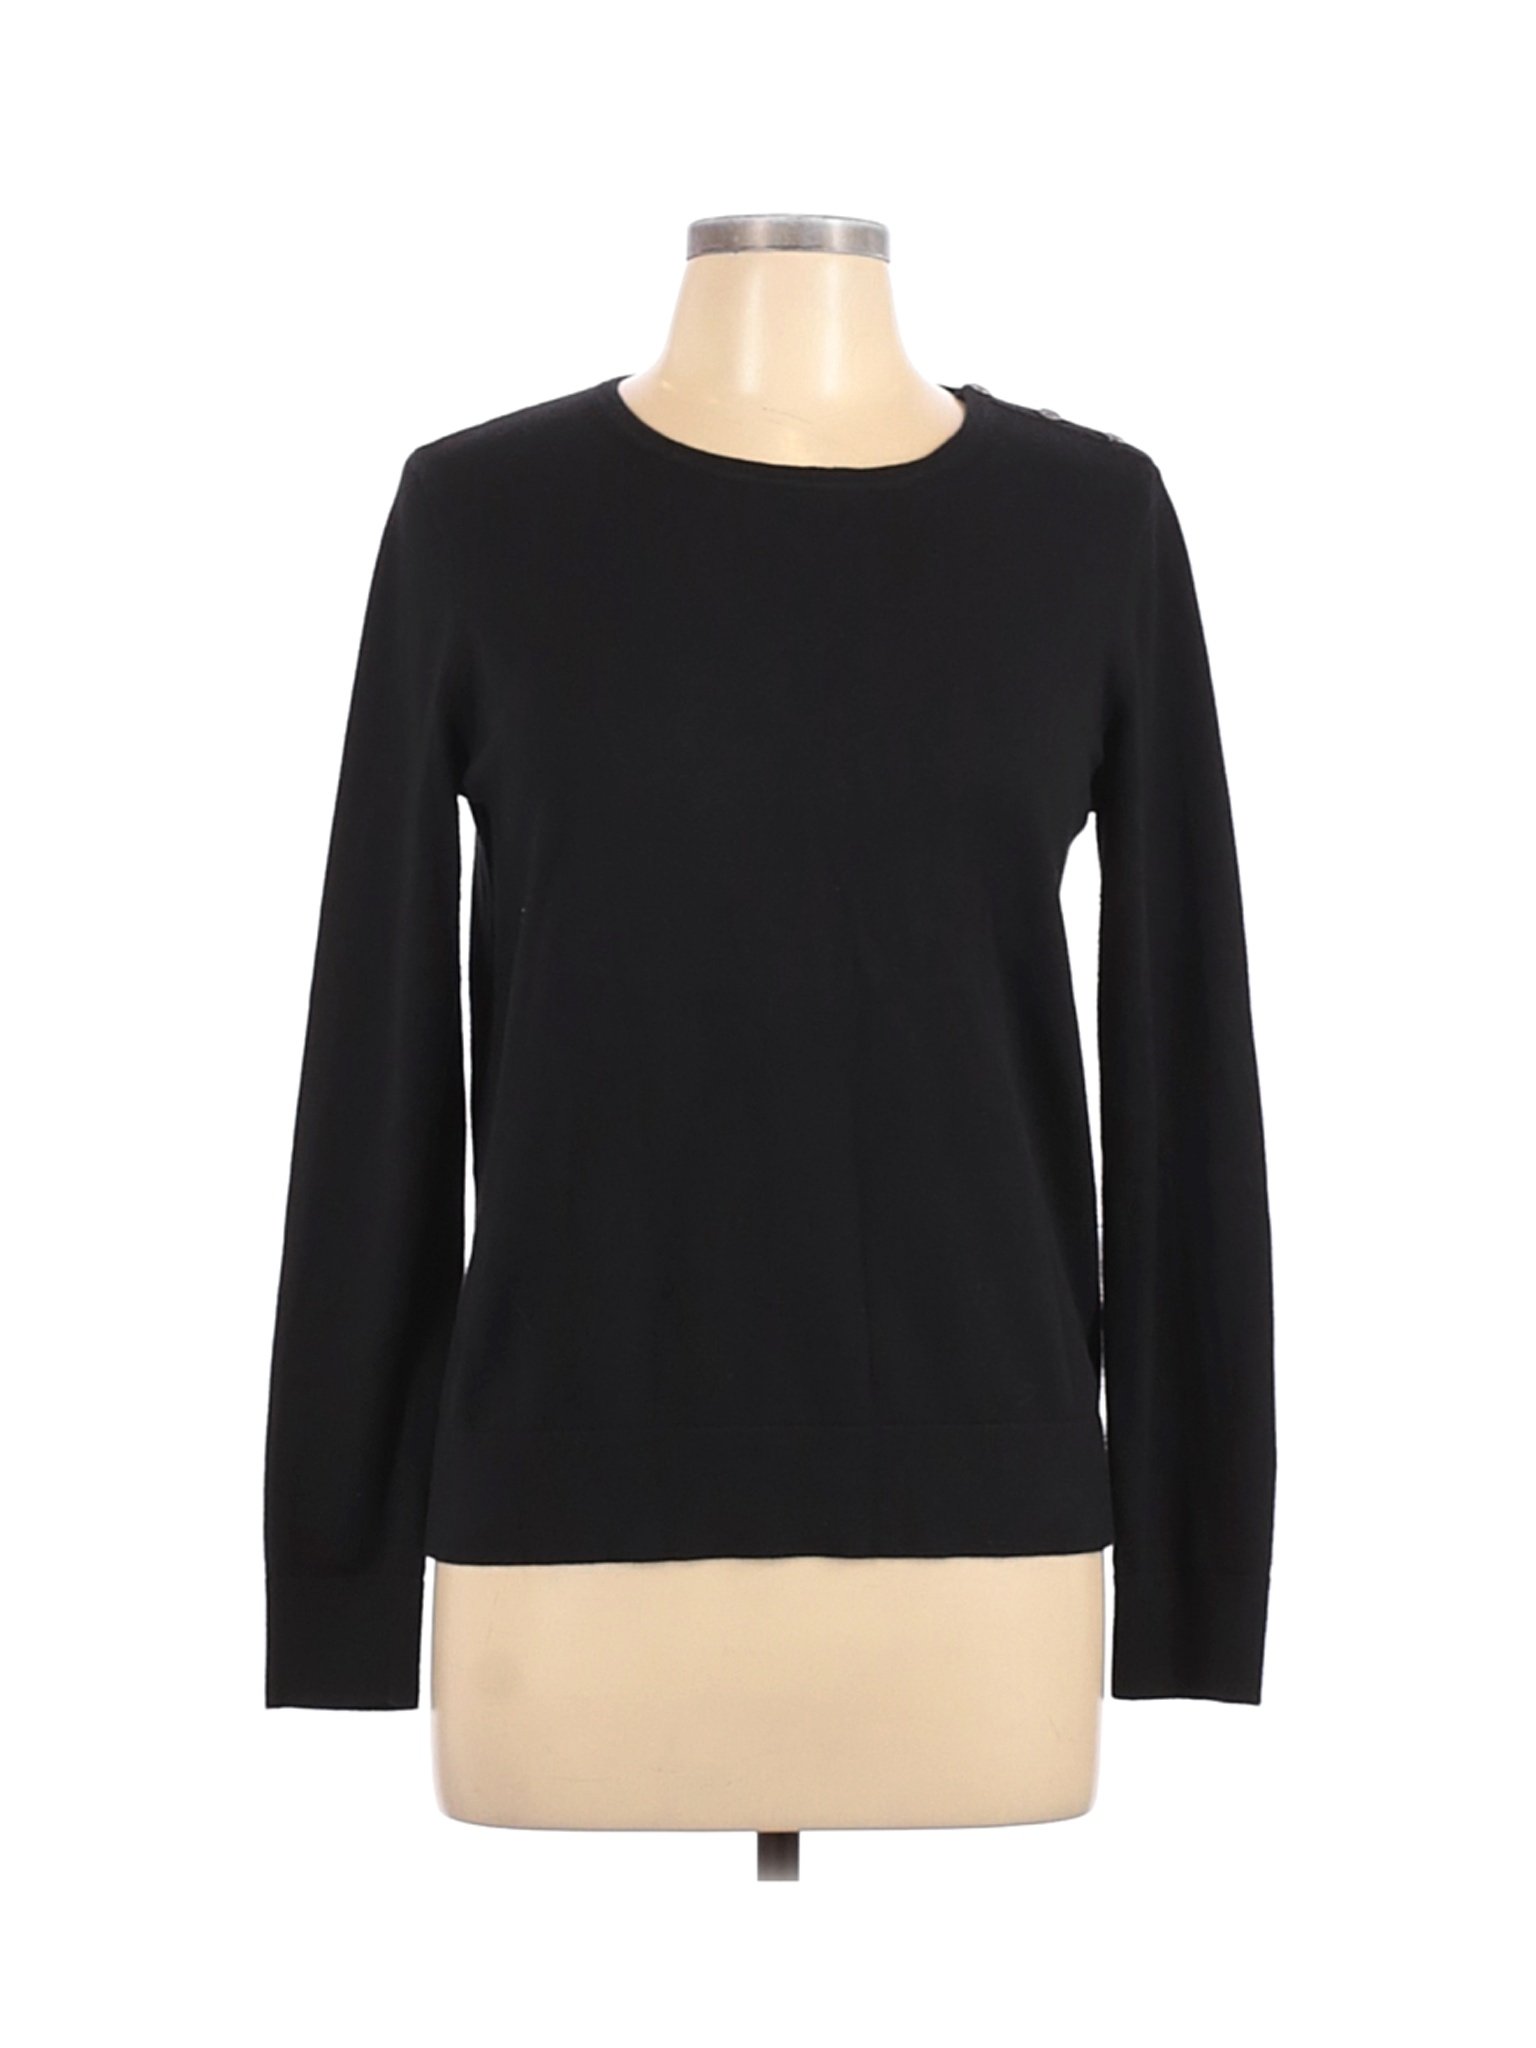 Ann Taylor Women Black Pullover Sweater L | eBay